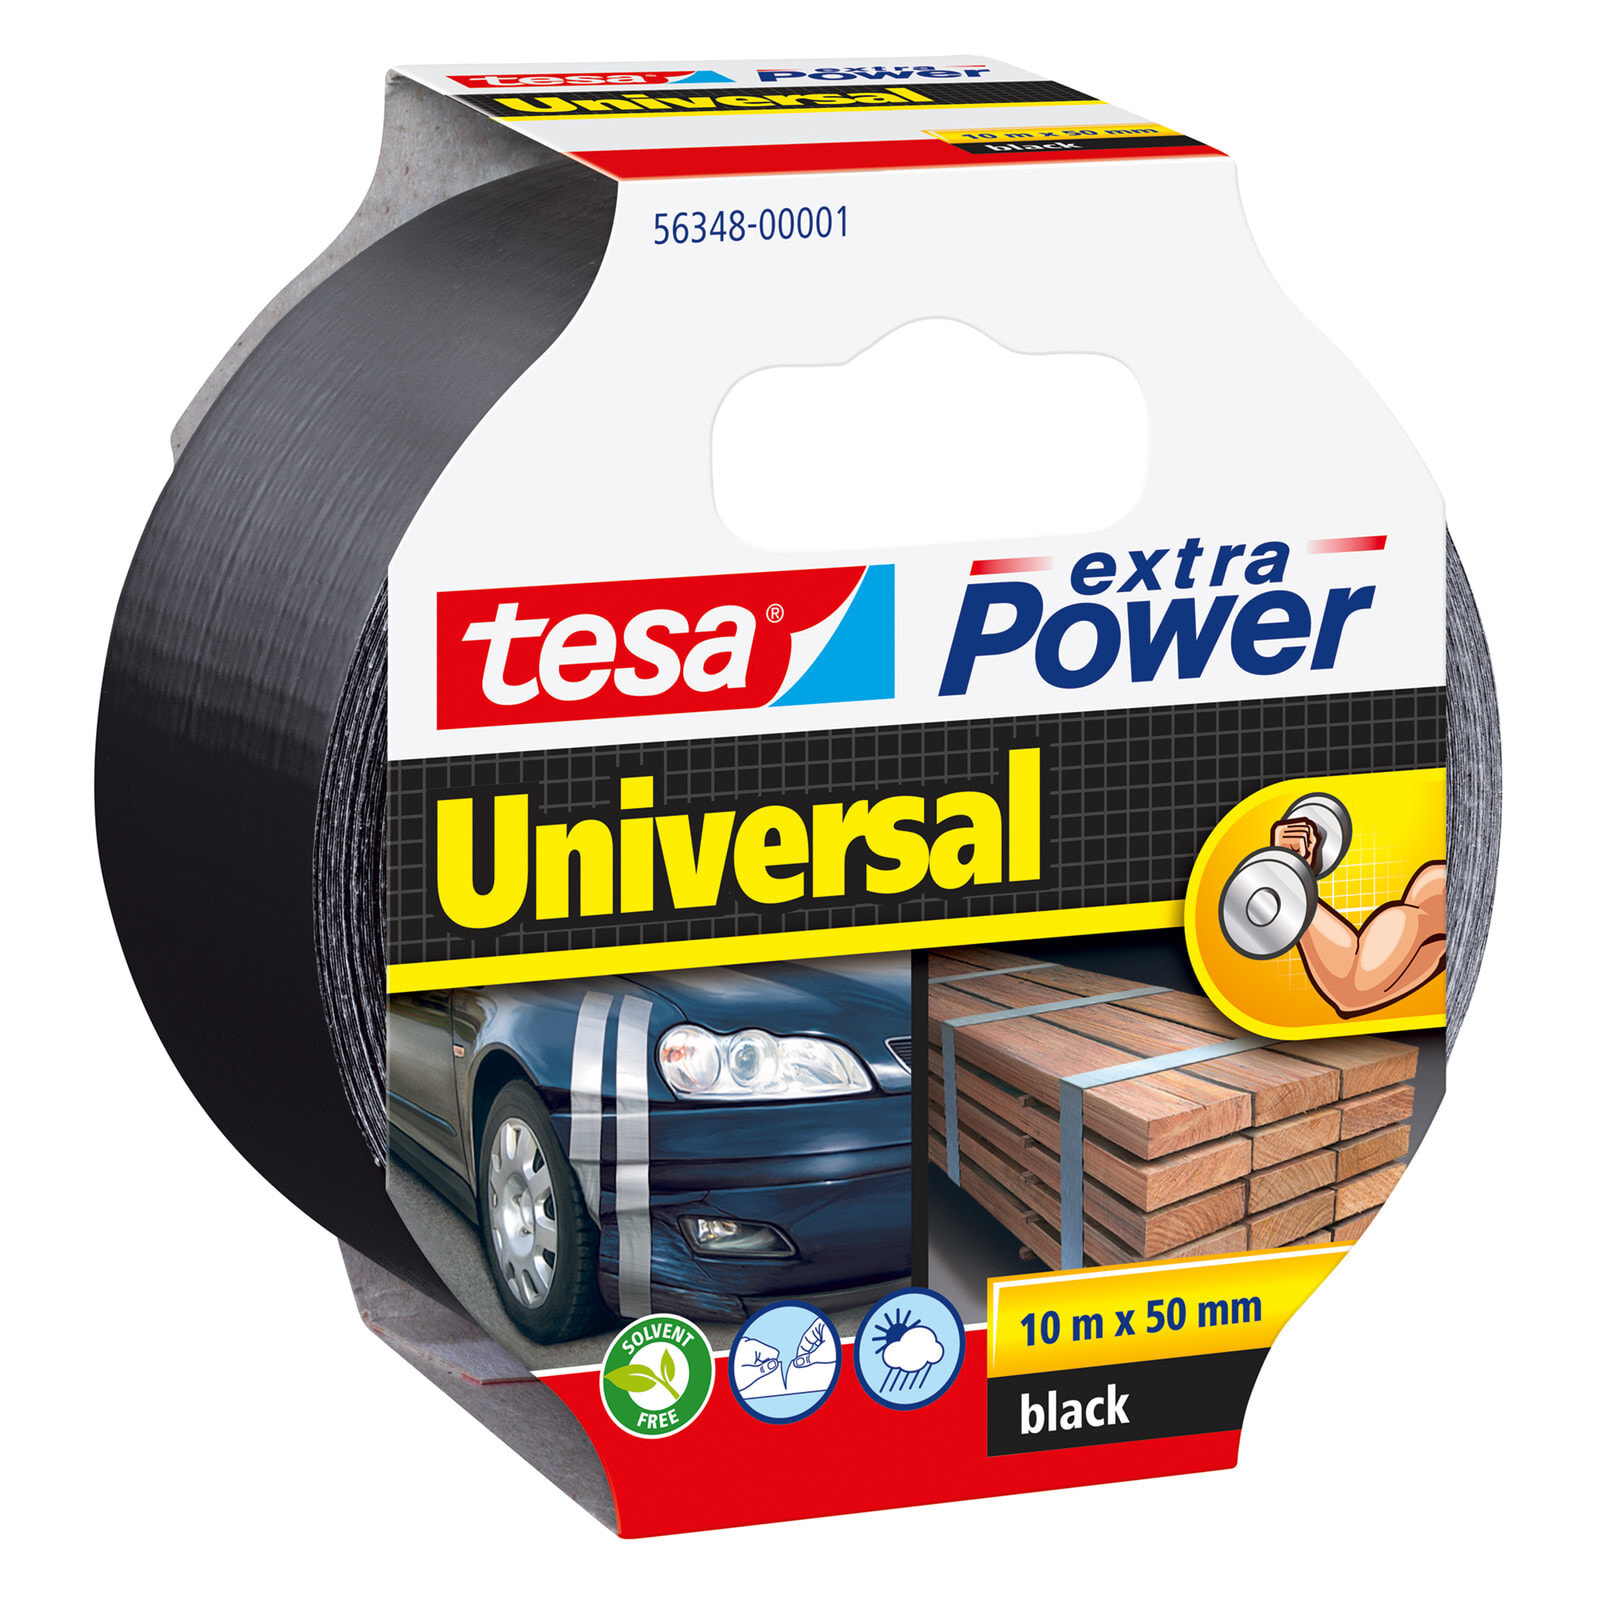 TESA extra Power Universal Черный 10 m 56348-00001-05